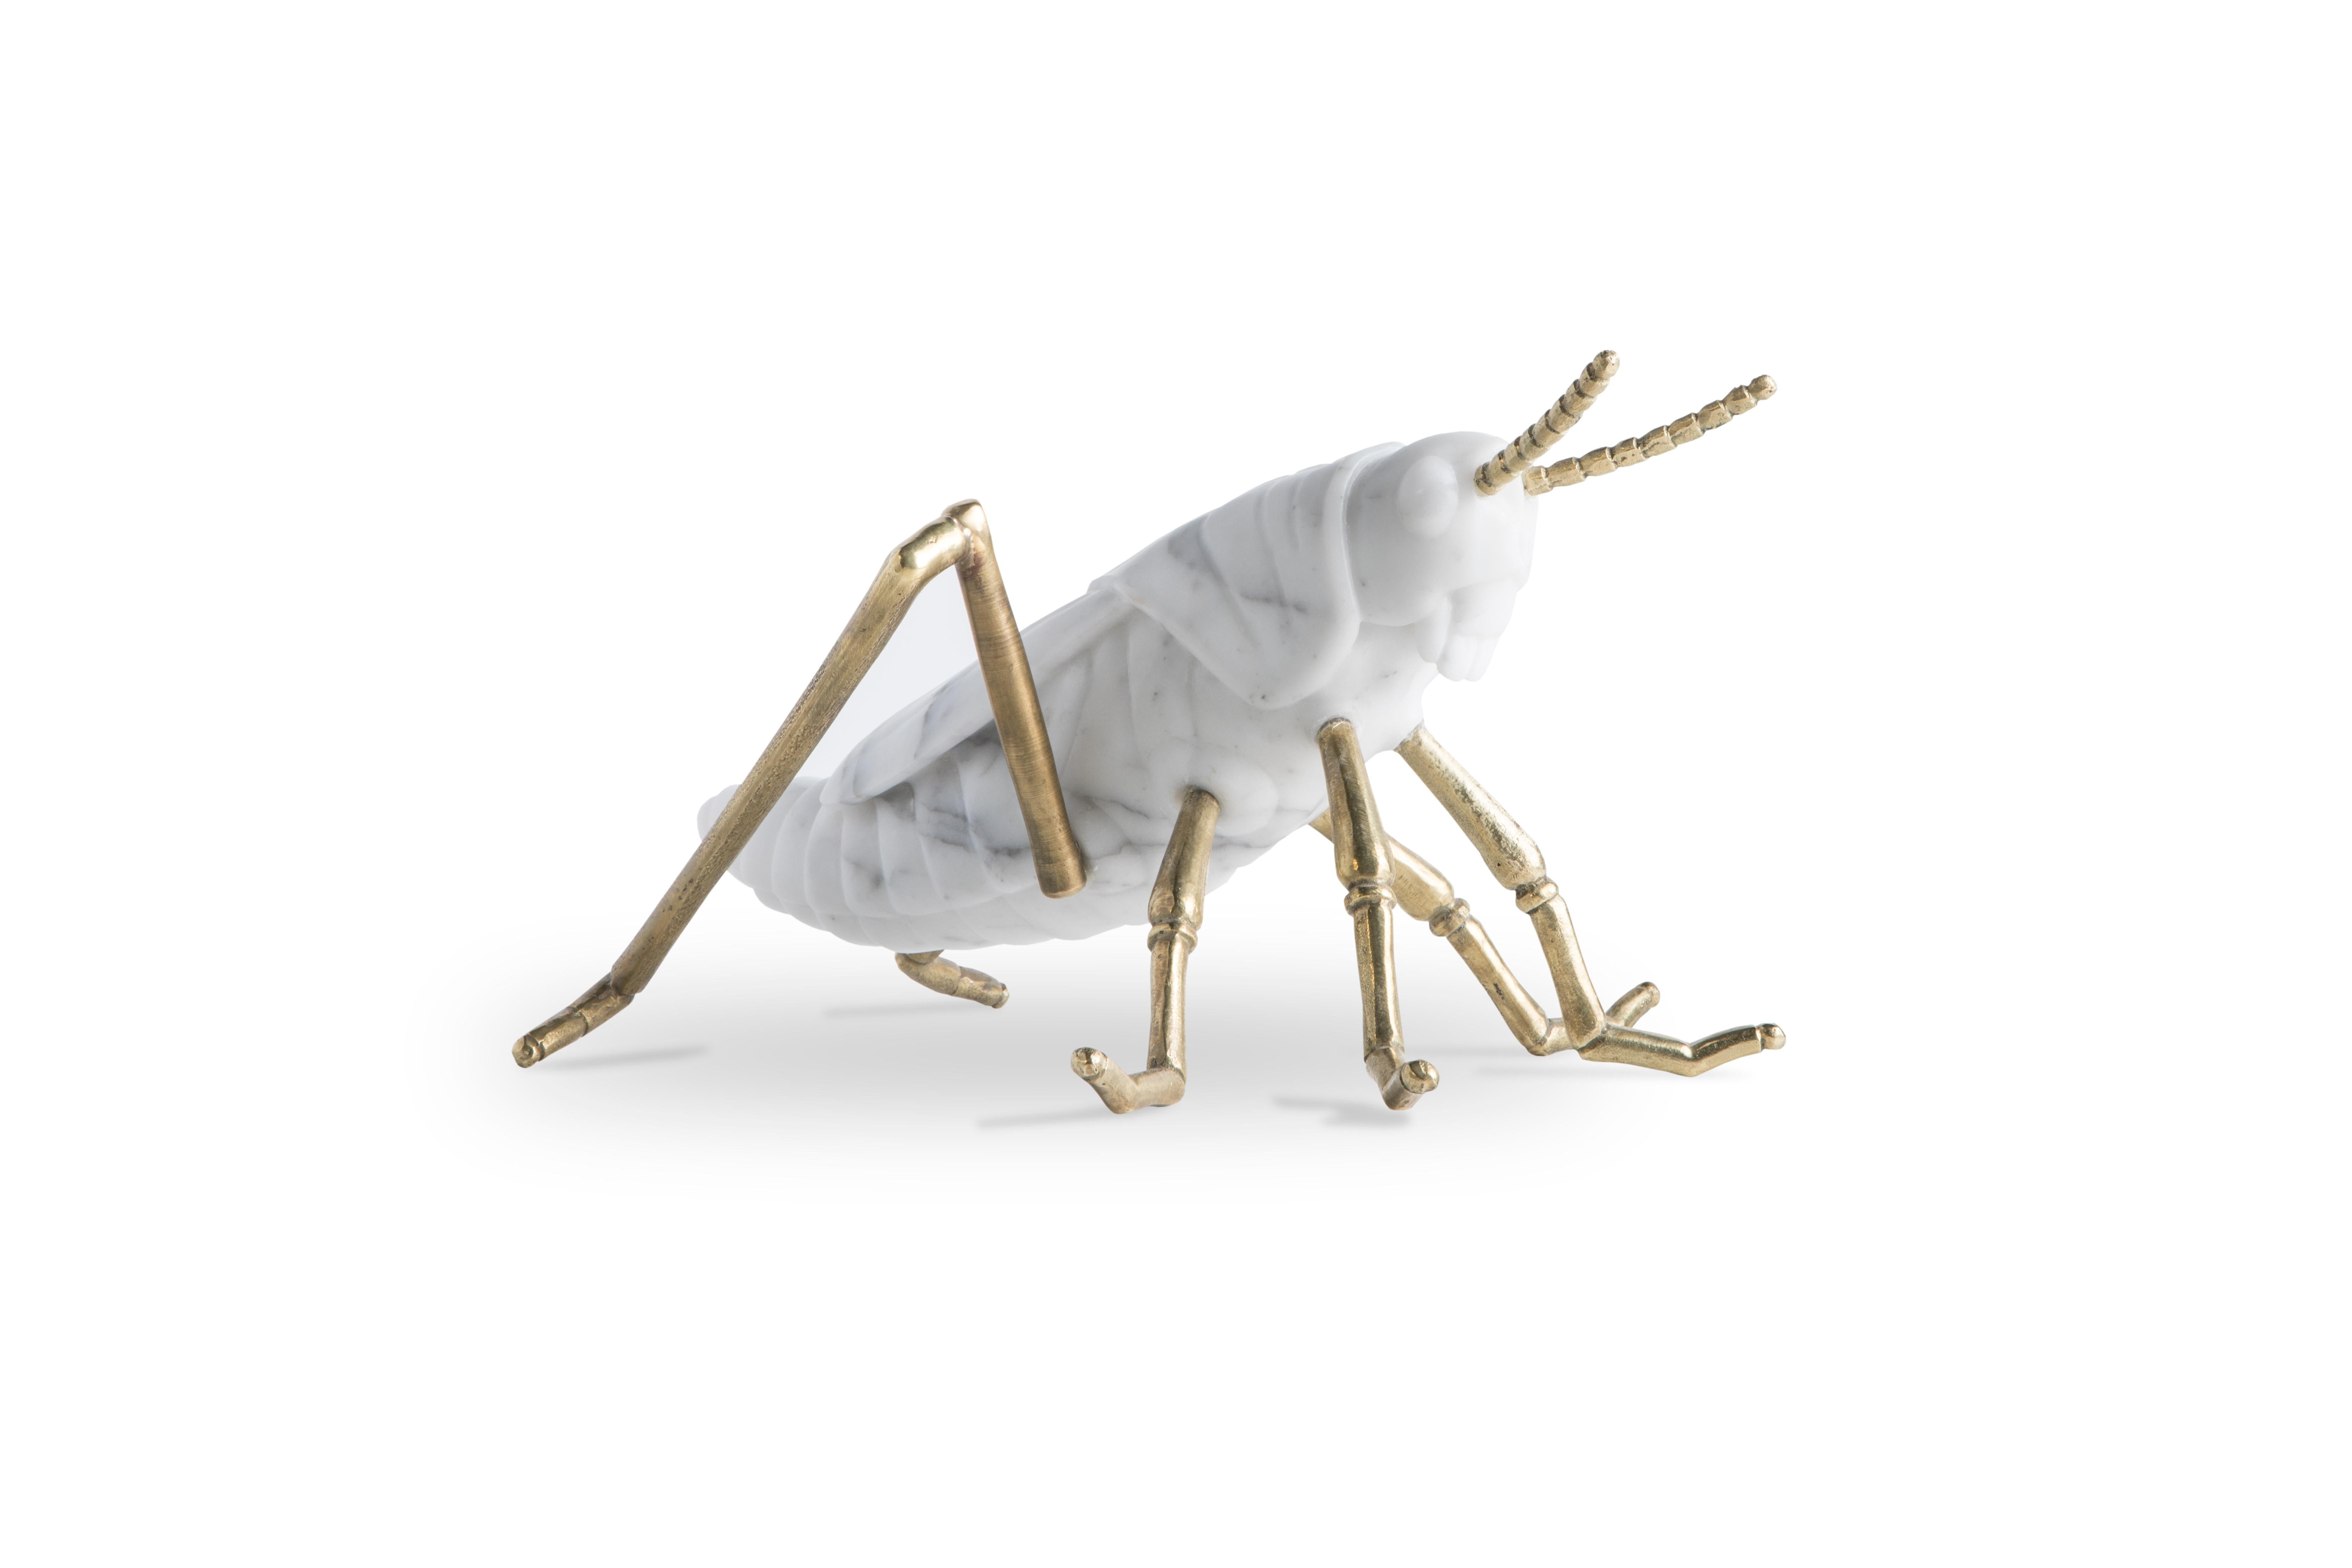 Locusta Migratoria is a grasshopper in Arabescato marble and brass Made in Italy. 
Designed by Massimiliano Giornetti, former creative director for the fashion house Salvatore Ferragamo, it is a special collaboration with FiammettaV Home